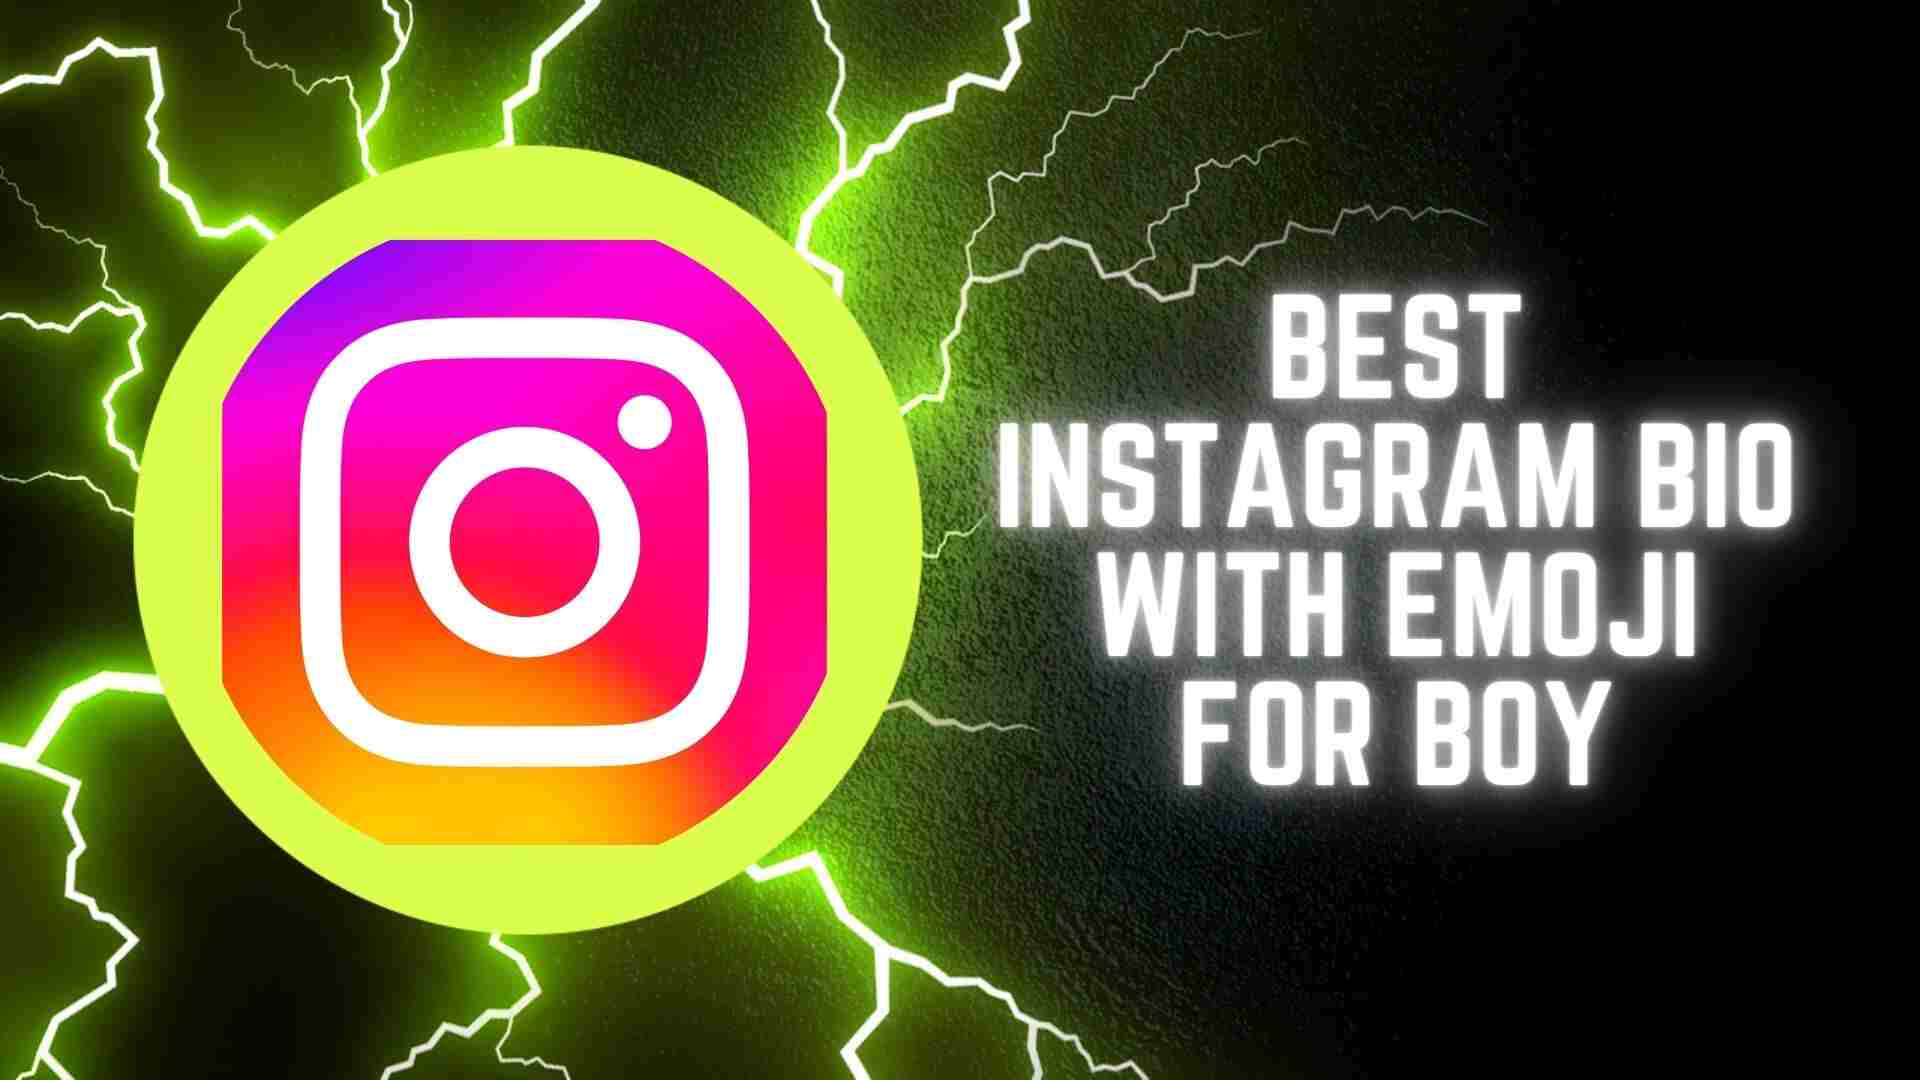 Best Instagram bio with emoji for boy